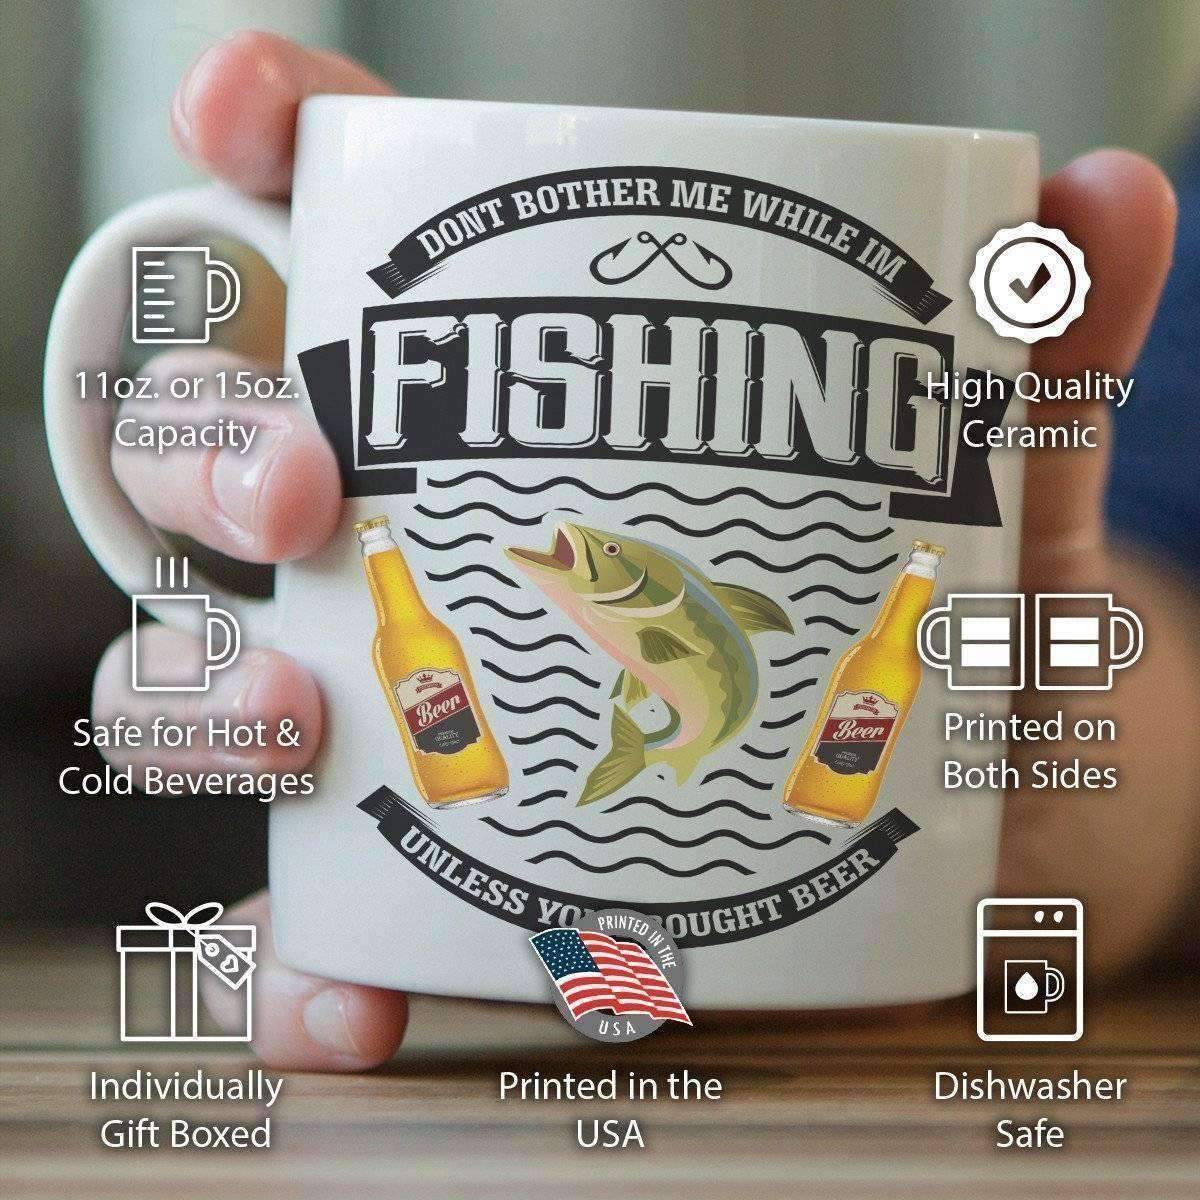 "Don't Bother Me While I'm Fishing..." Fishing Mug - OutdoorsAdventurer